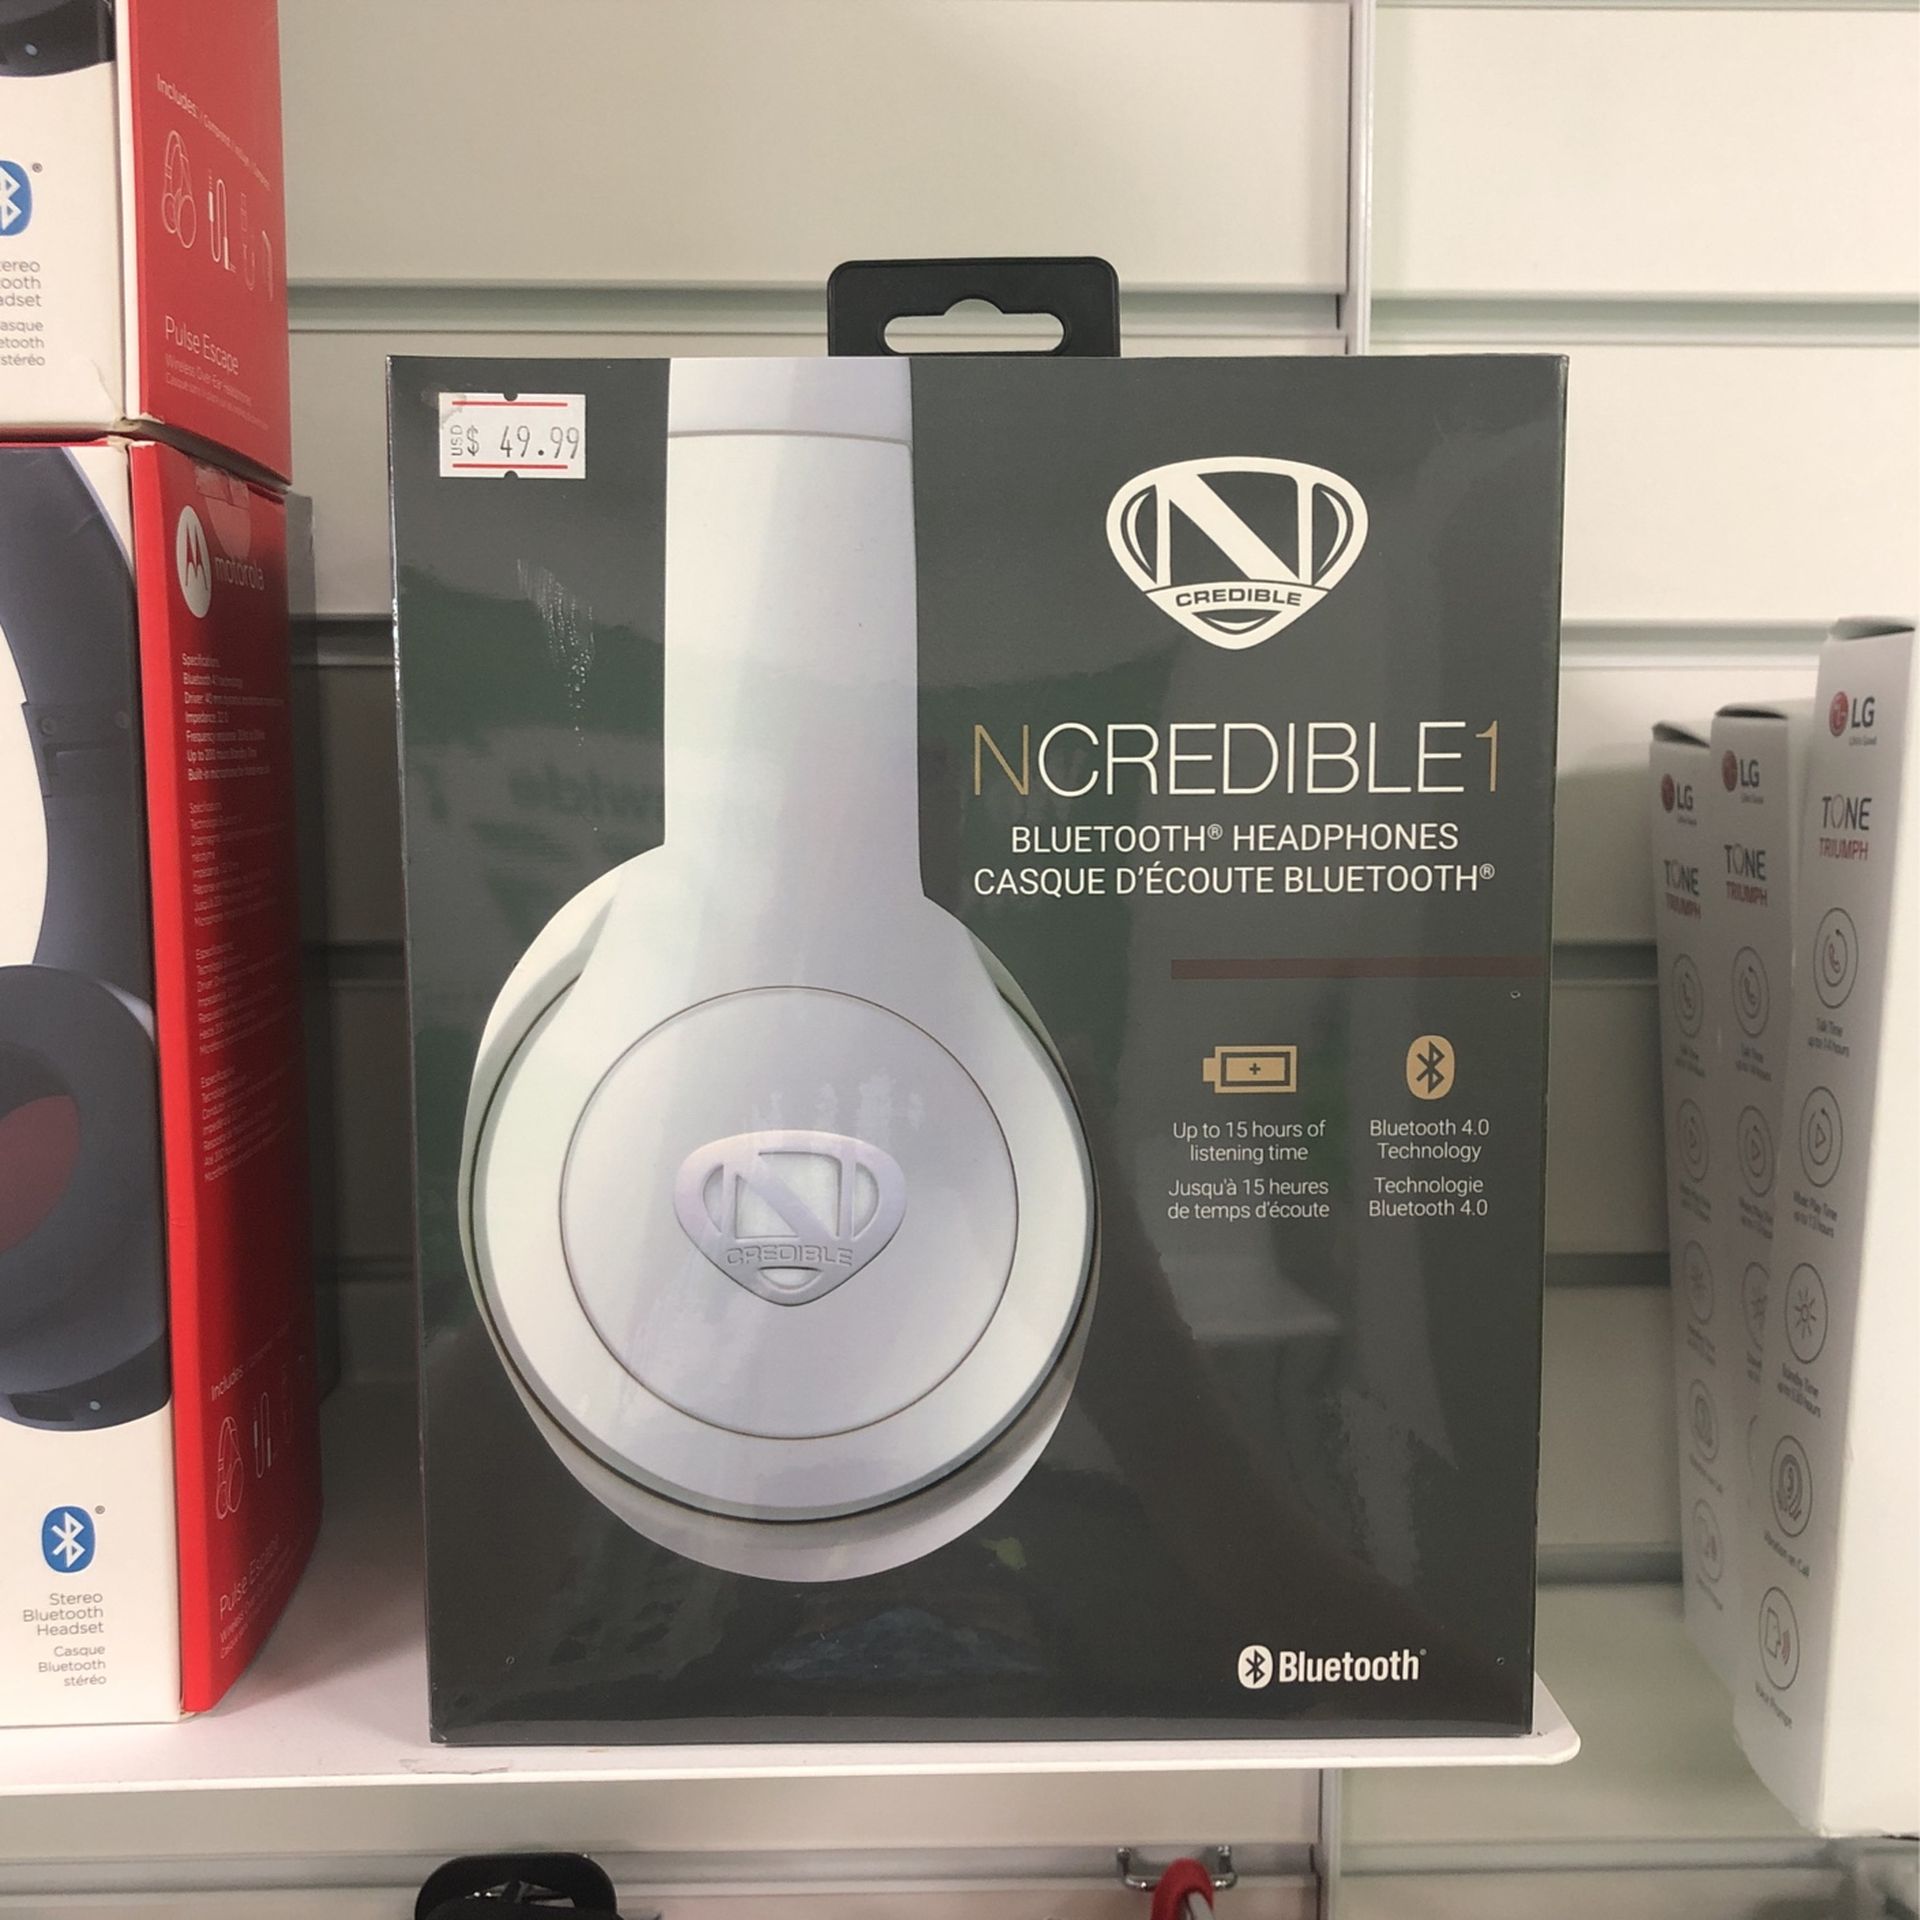 Ncredible Bluetooth Headphones $10 Off